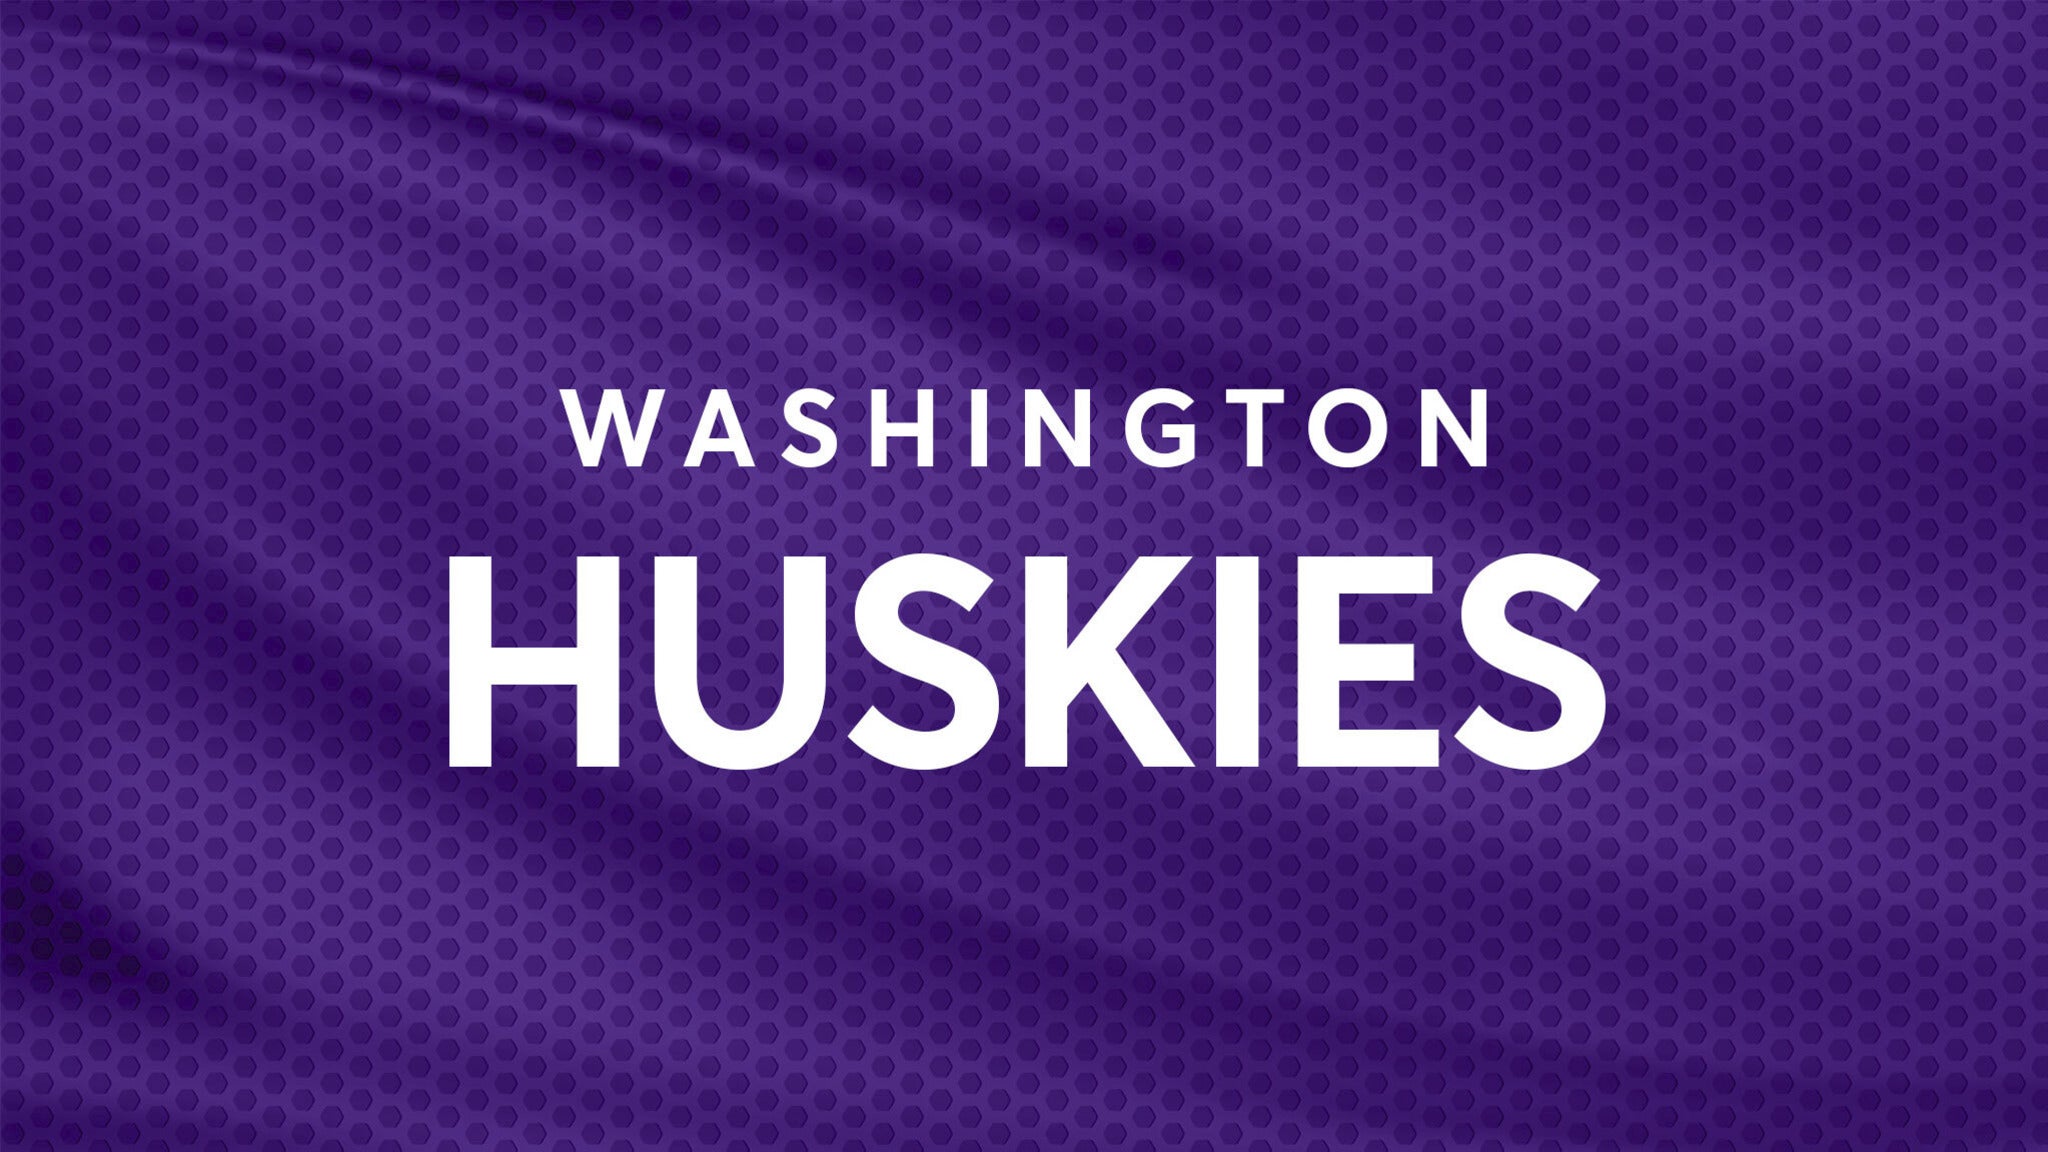 University of Washington Huskies Football presale information on freepresalepasswords.com